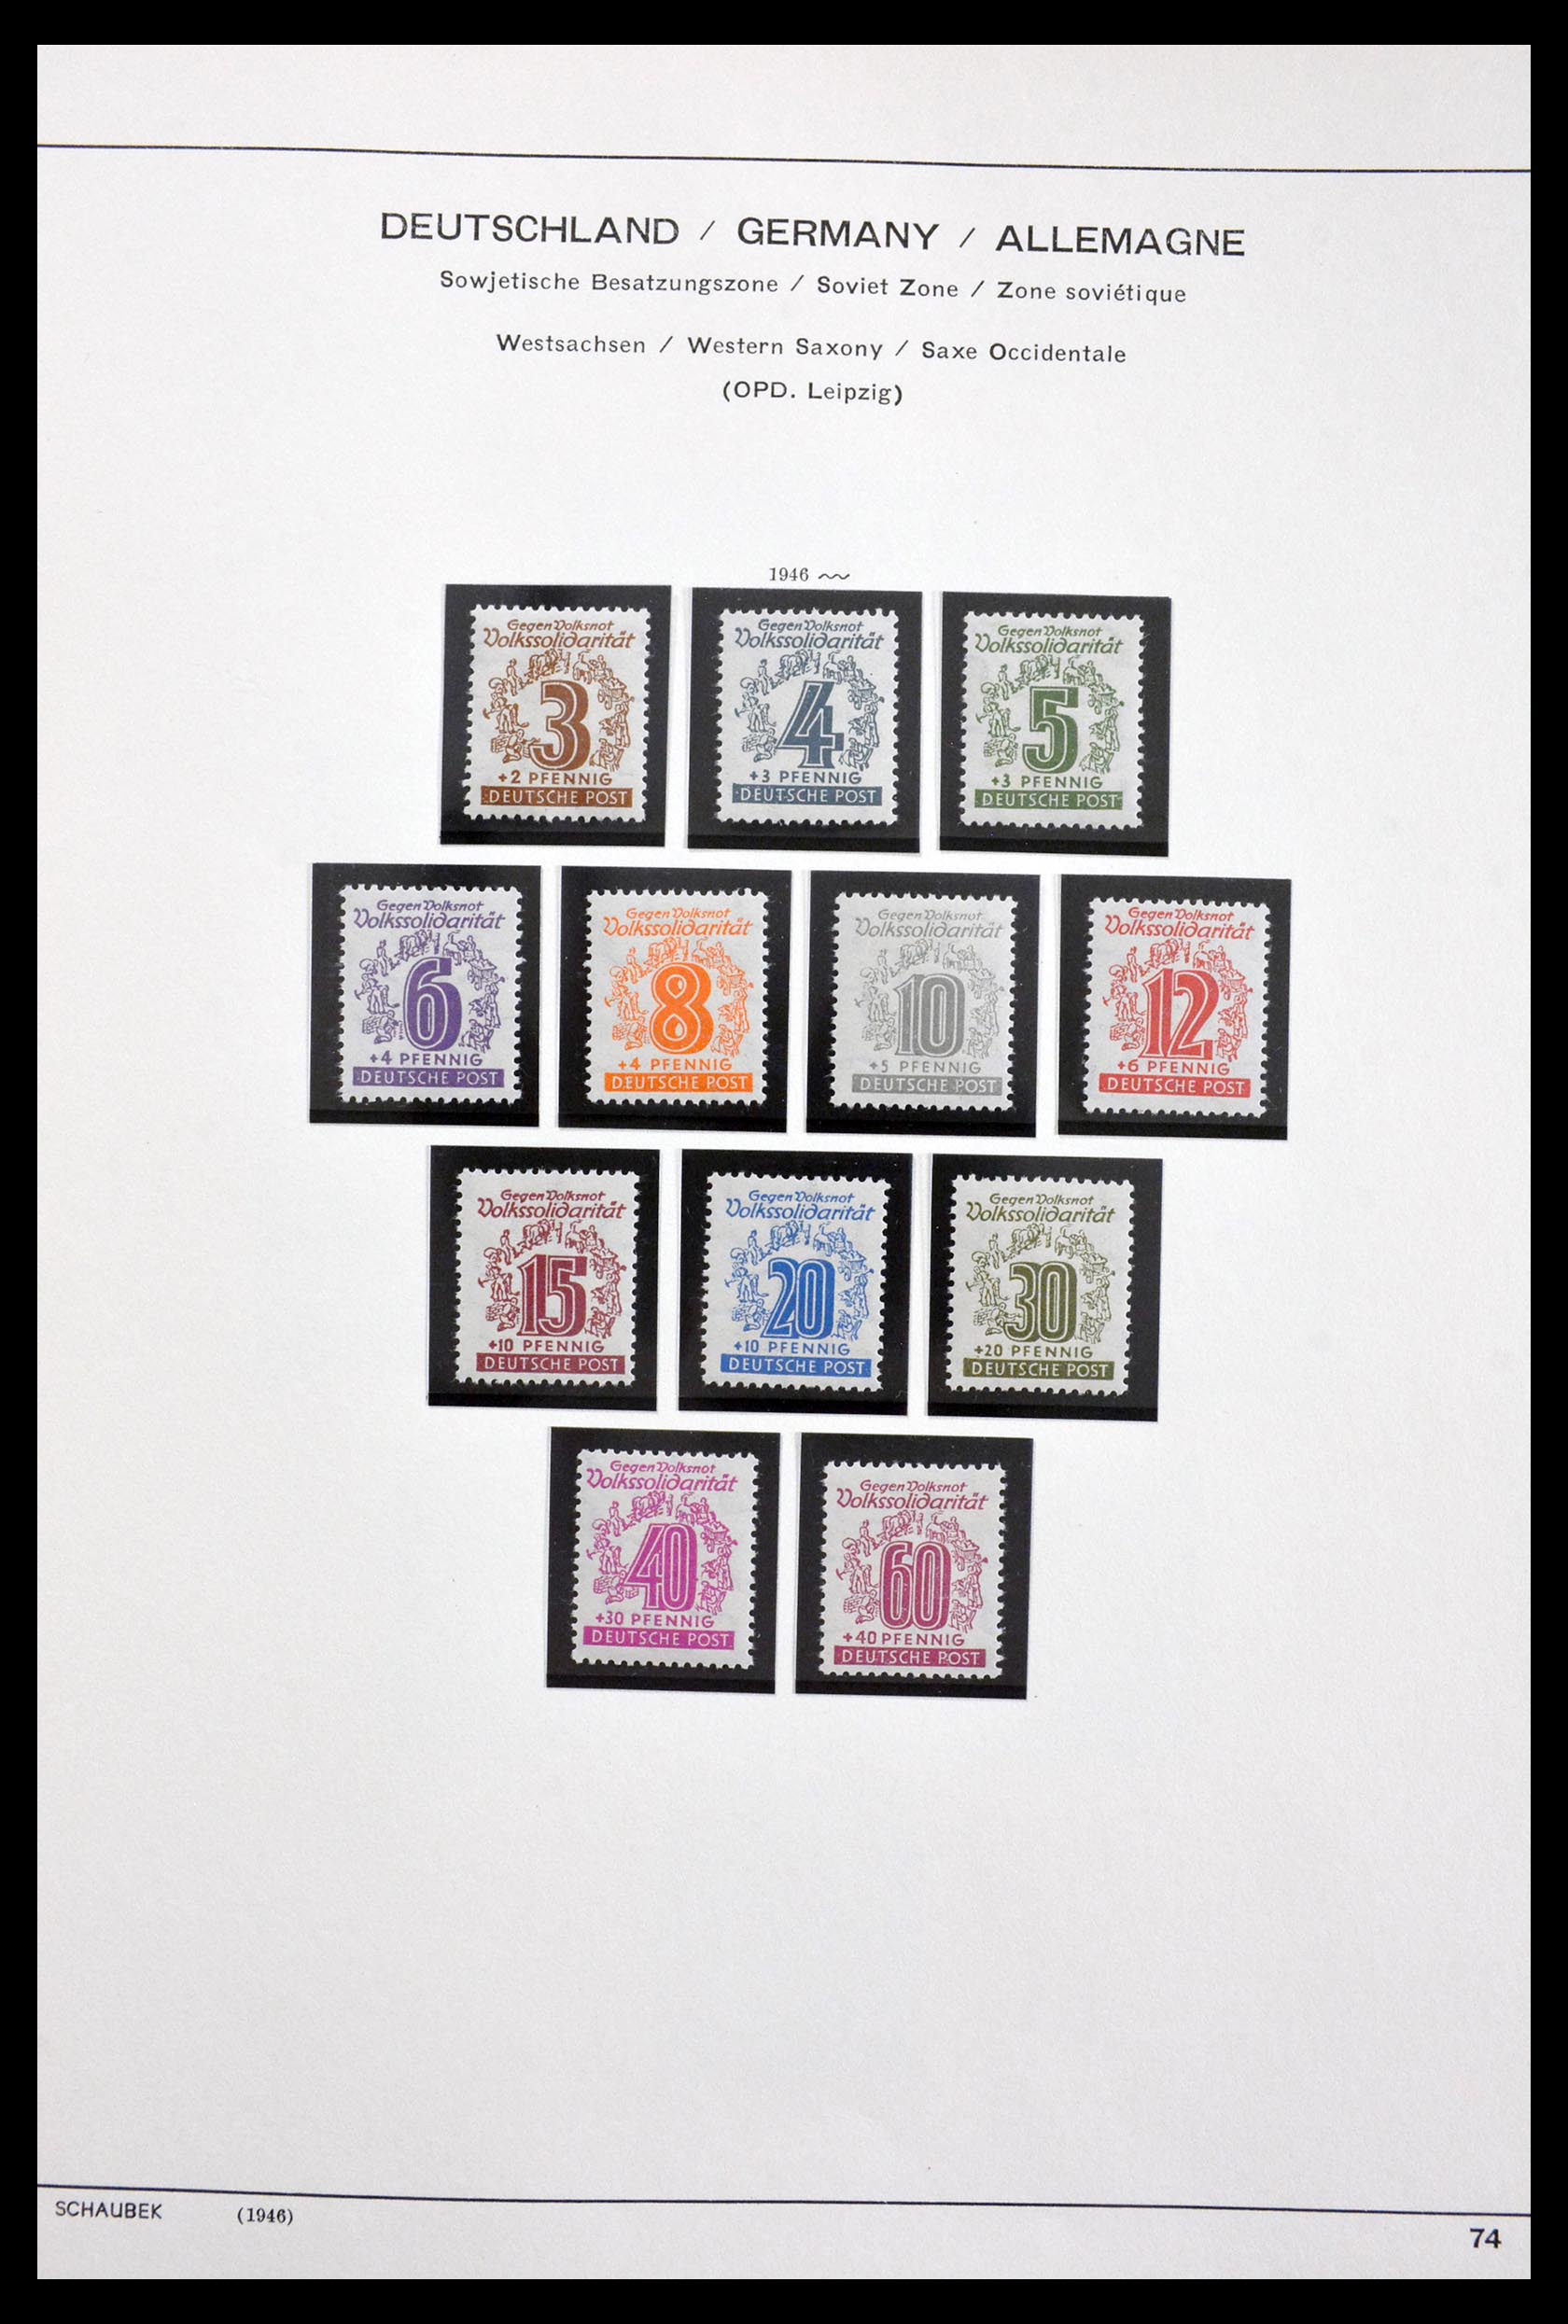 29731 011 - 29731 Local stamps Sovjetzone 1945-1949.